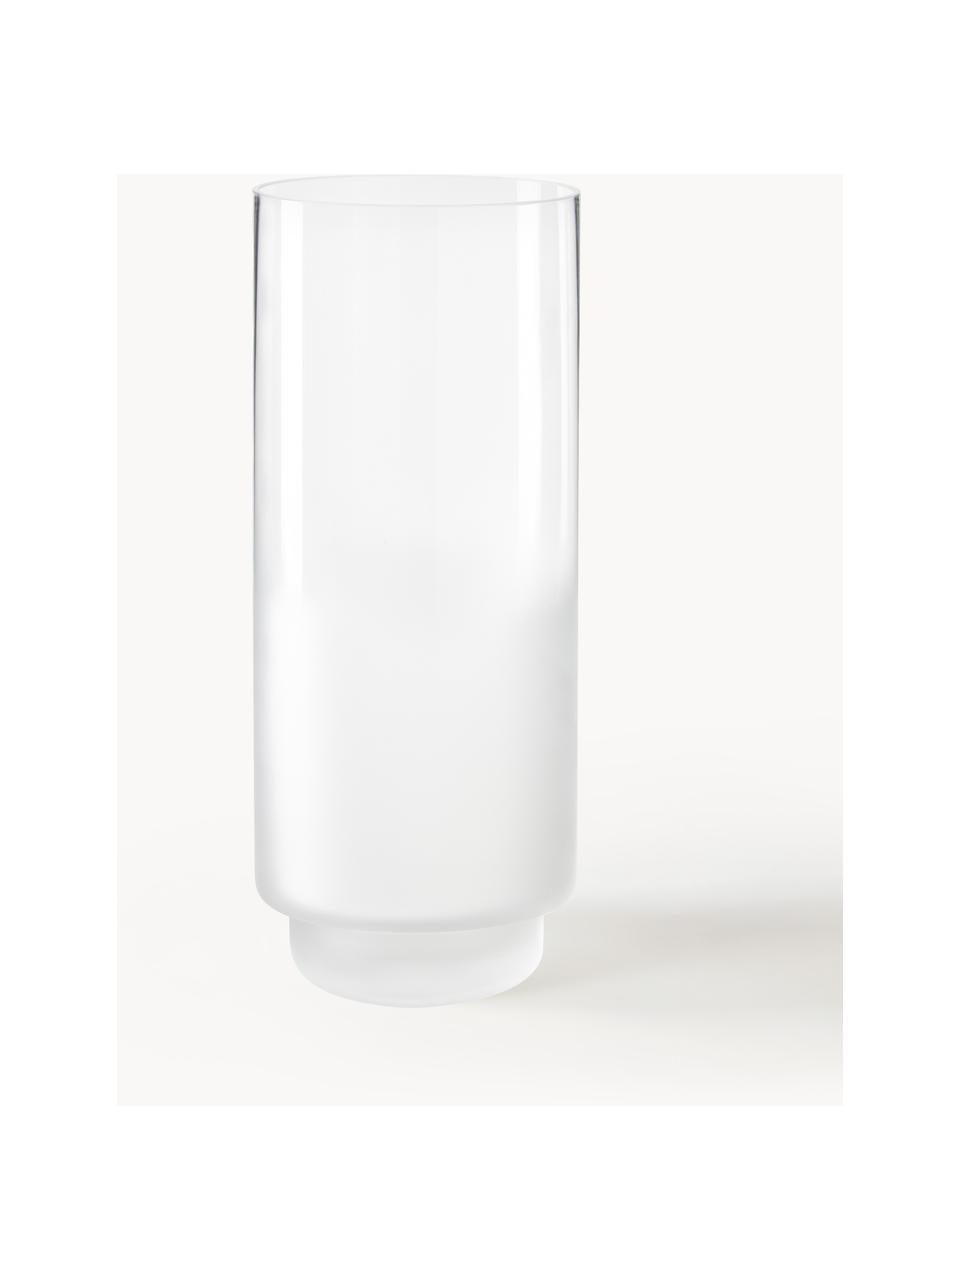 Vaso in vetro soffiato con sfumatura Milky, alt. 35 cm, Vetro, Trasparente, bianco, Ø 14 x Alt. 35 cm